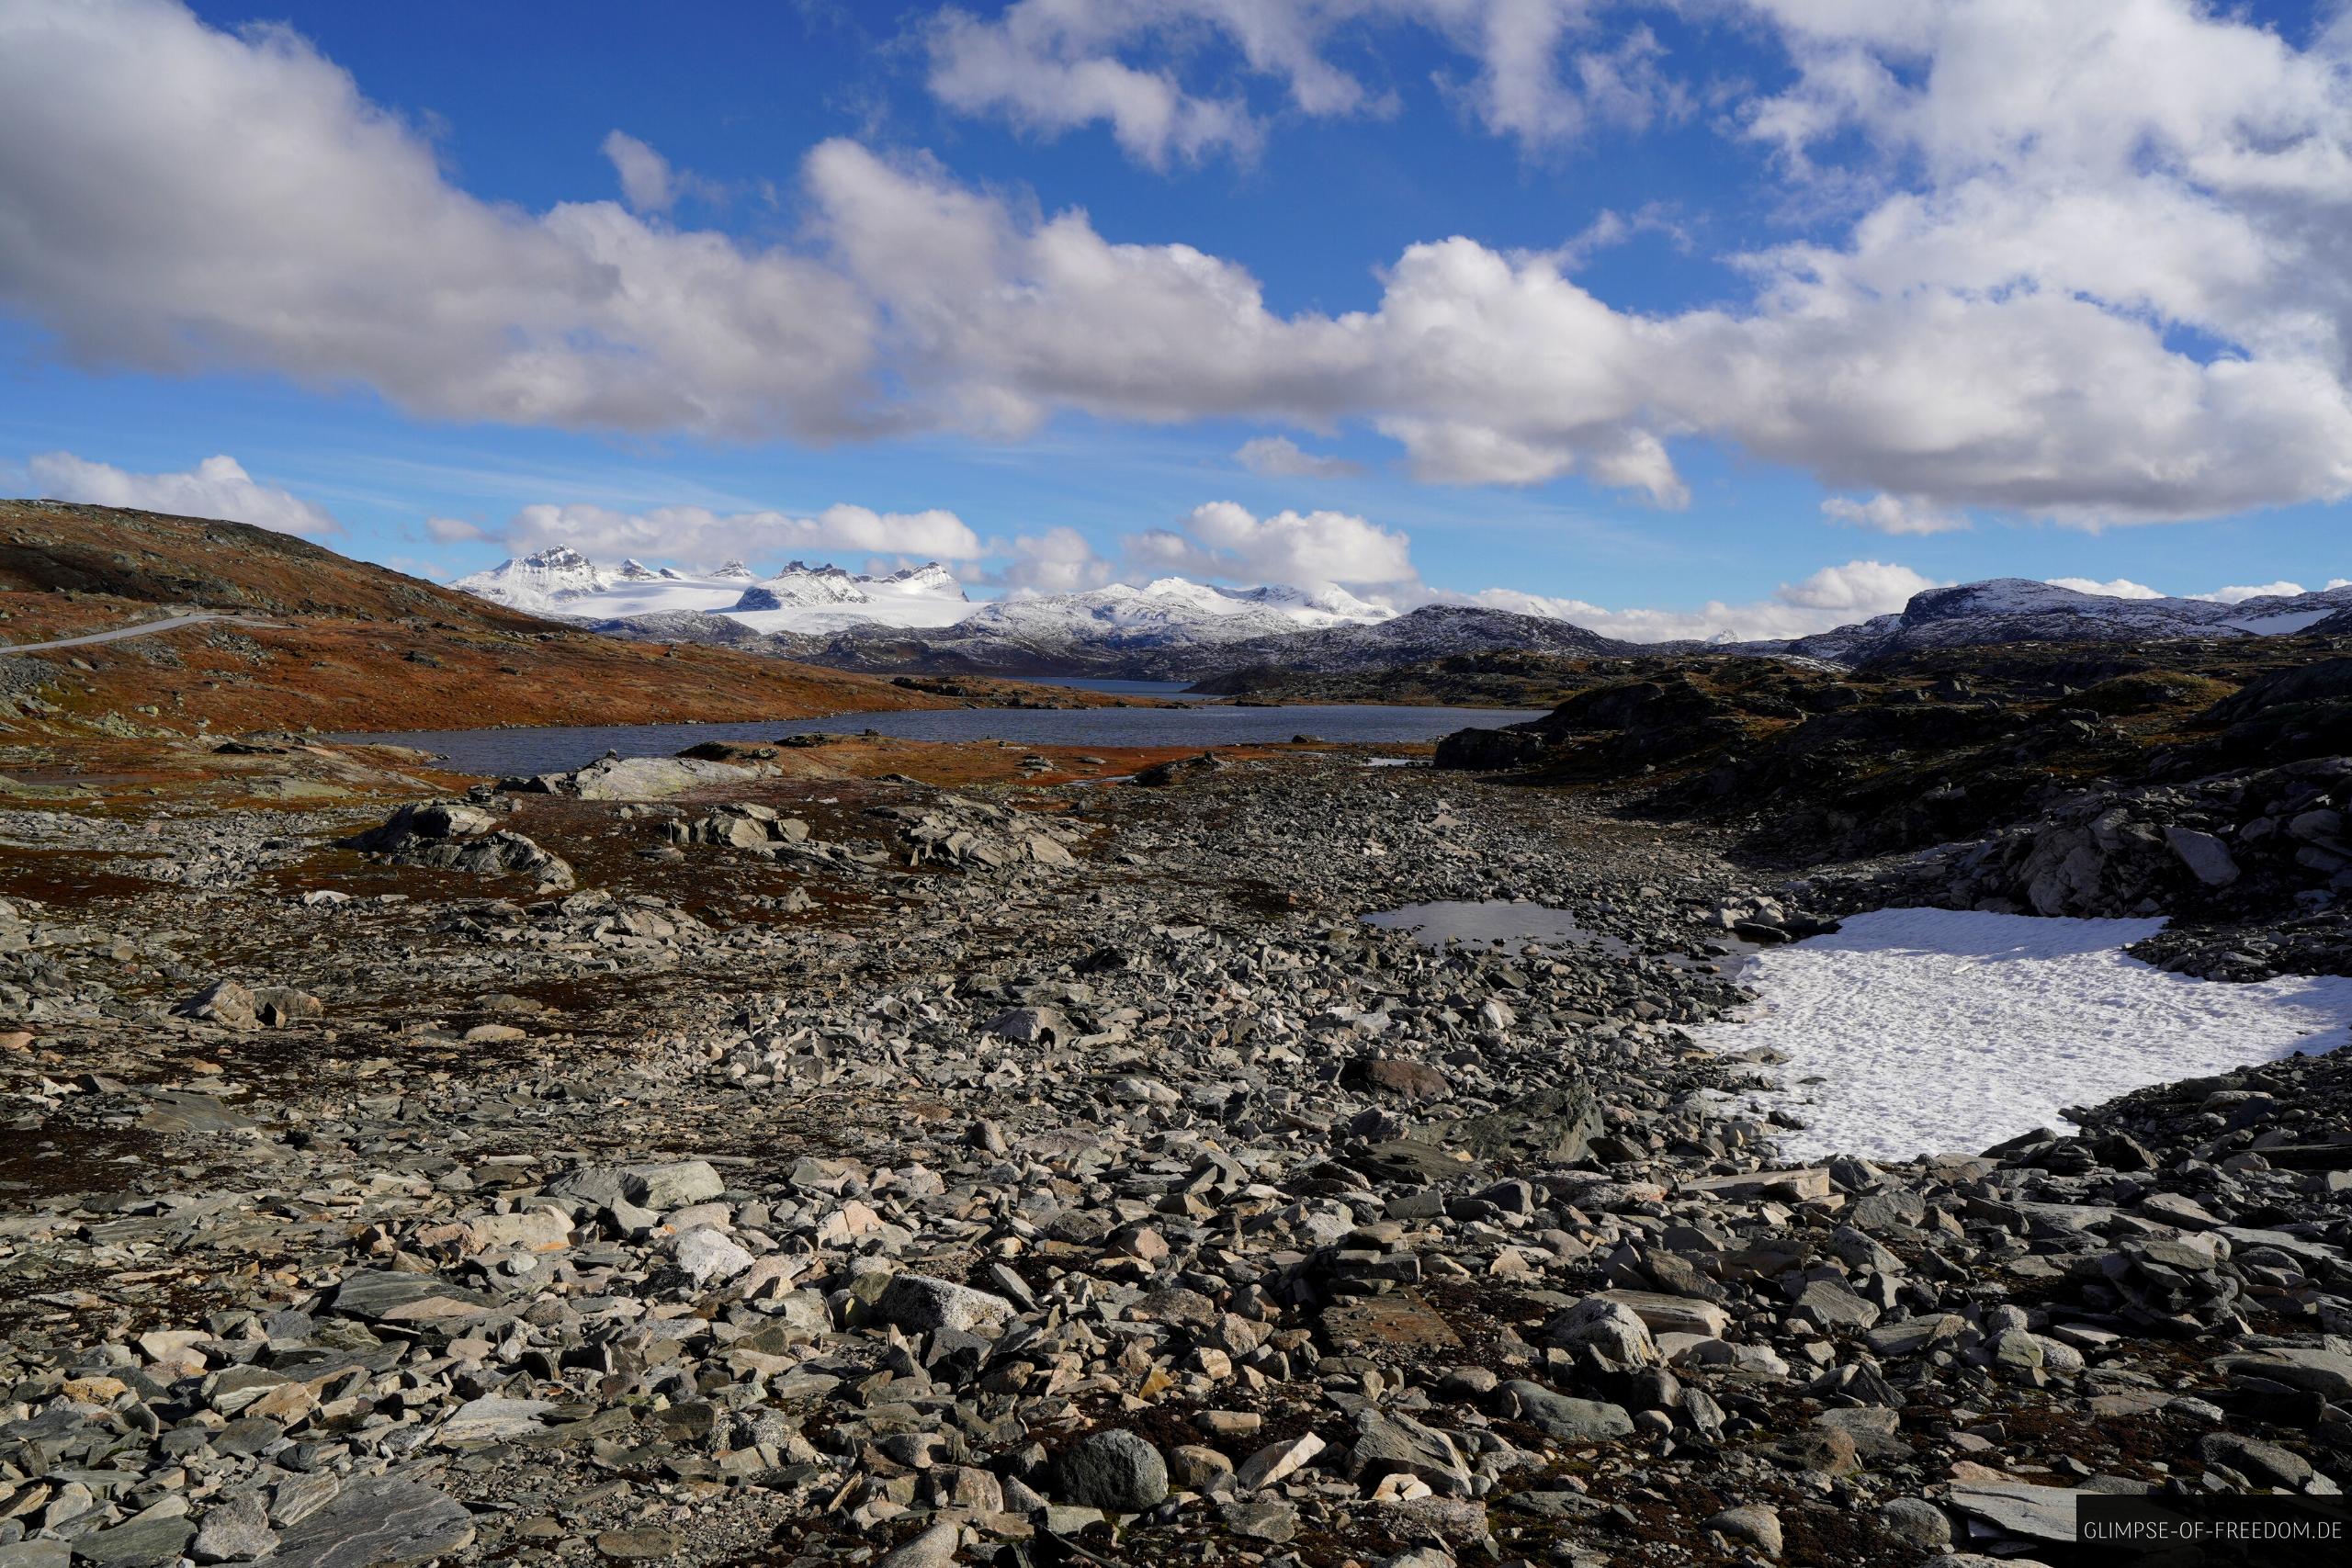 Sognefjellet: Berge, Felsen, Seen und Schnee